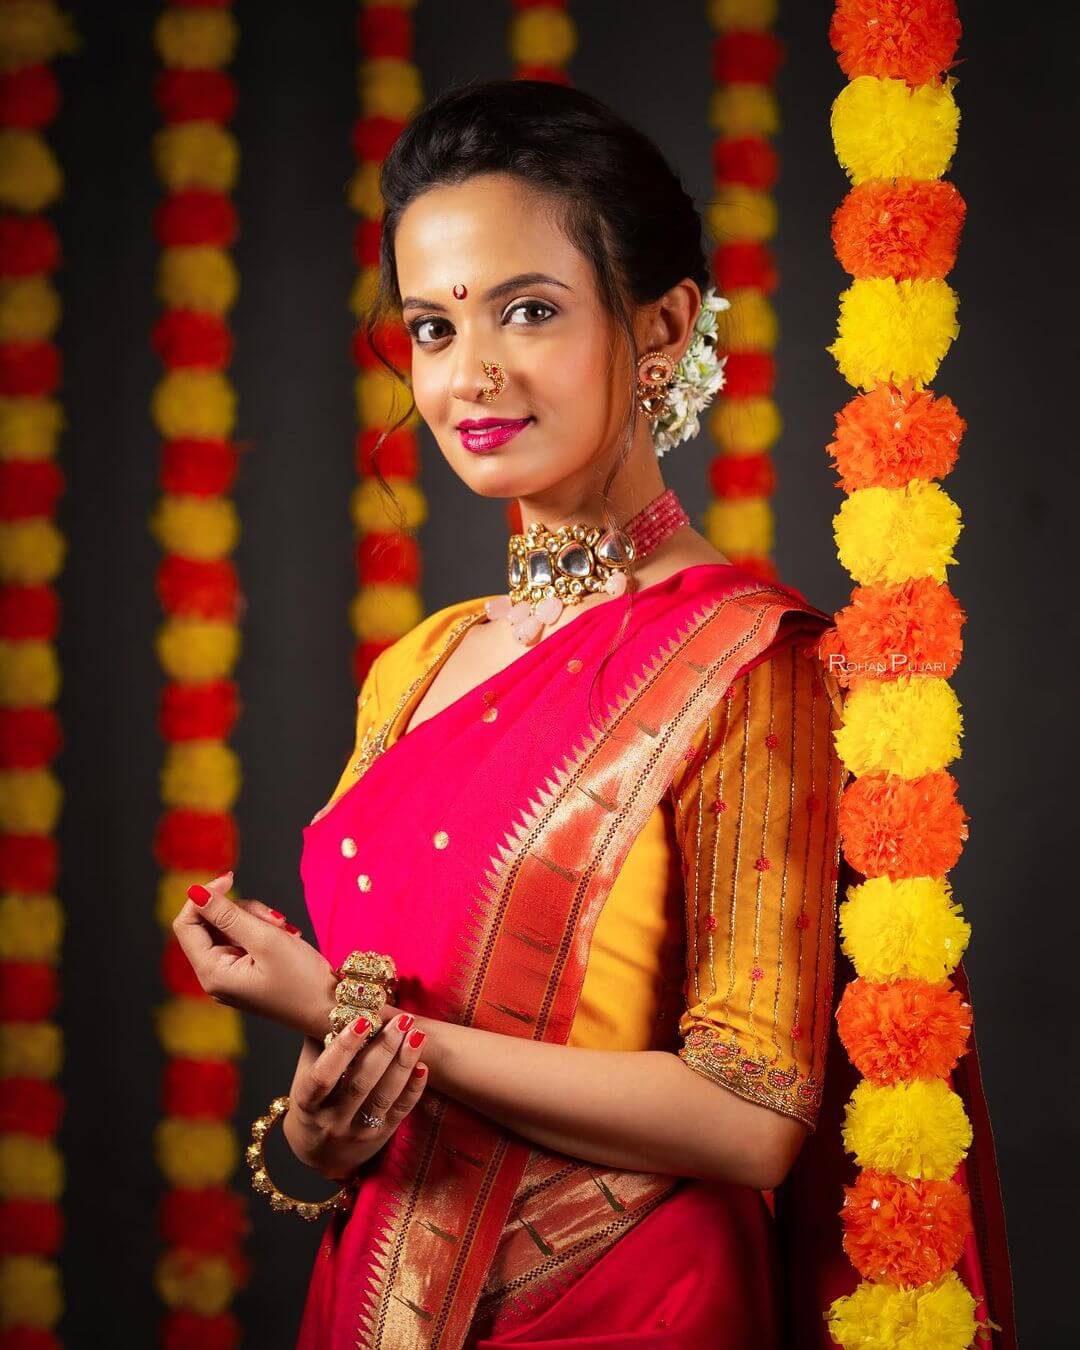 Ketaki Mategaonkar Look Ravishing In Red Saree With Yellow Blouse